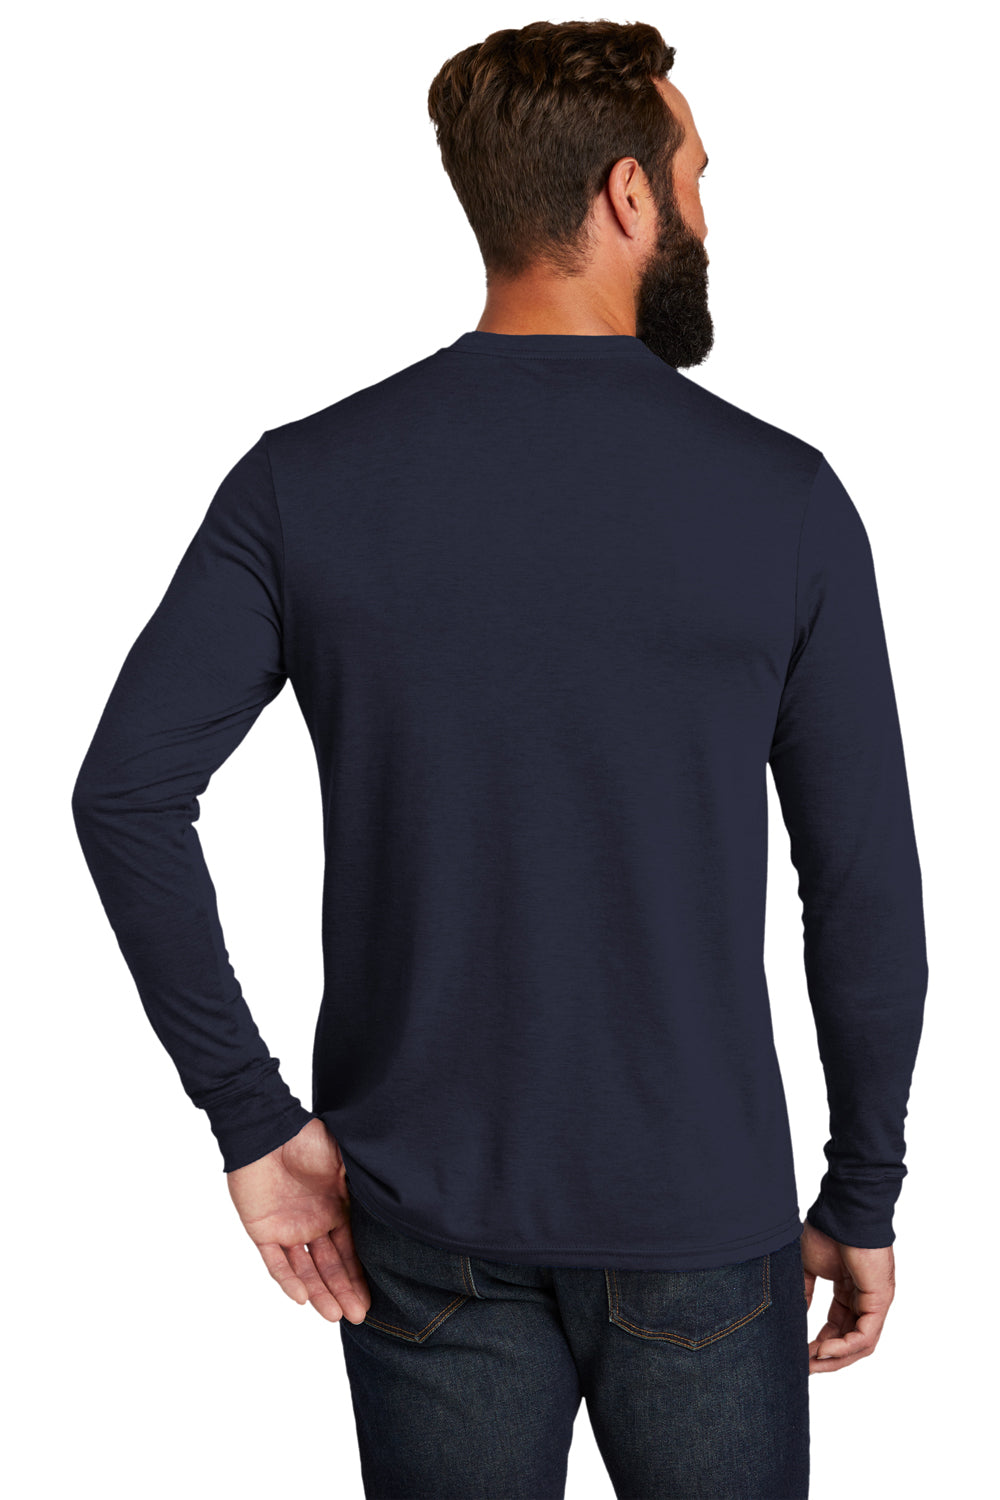 Allmade AL6004 Mens Long Sleeve Crewneck T-Shirt Night Sky Navy Blue Model Back